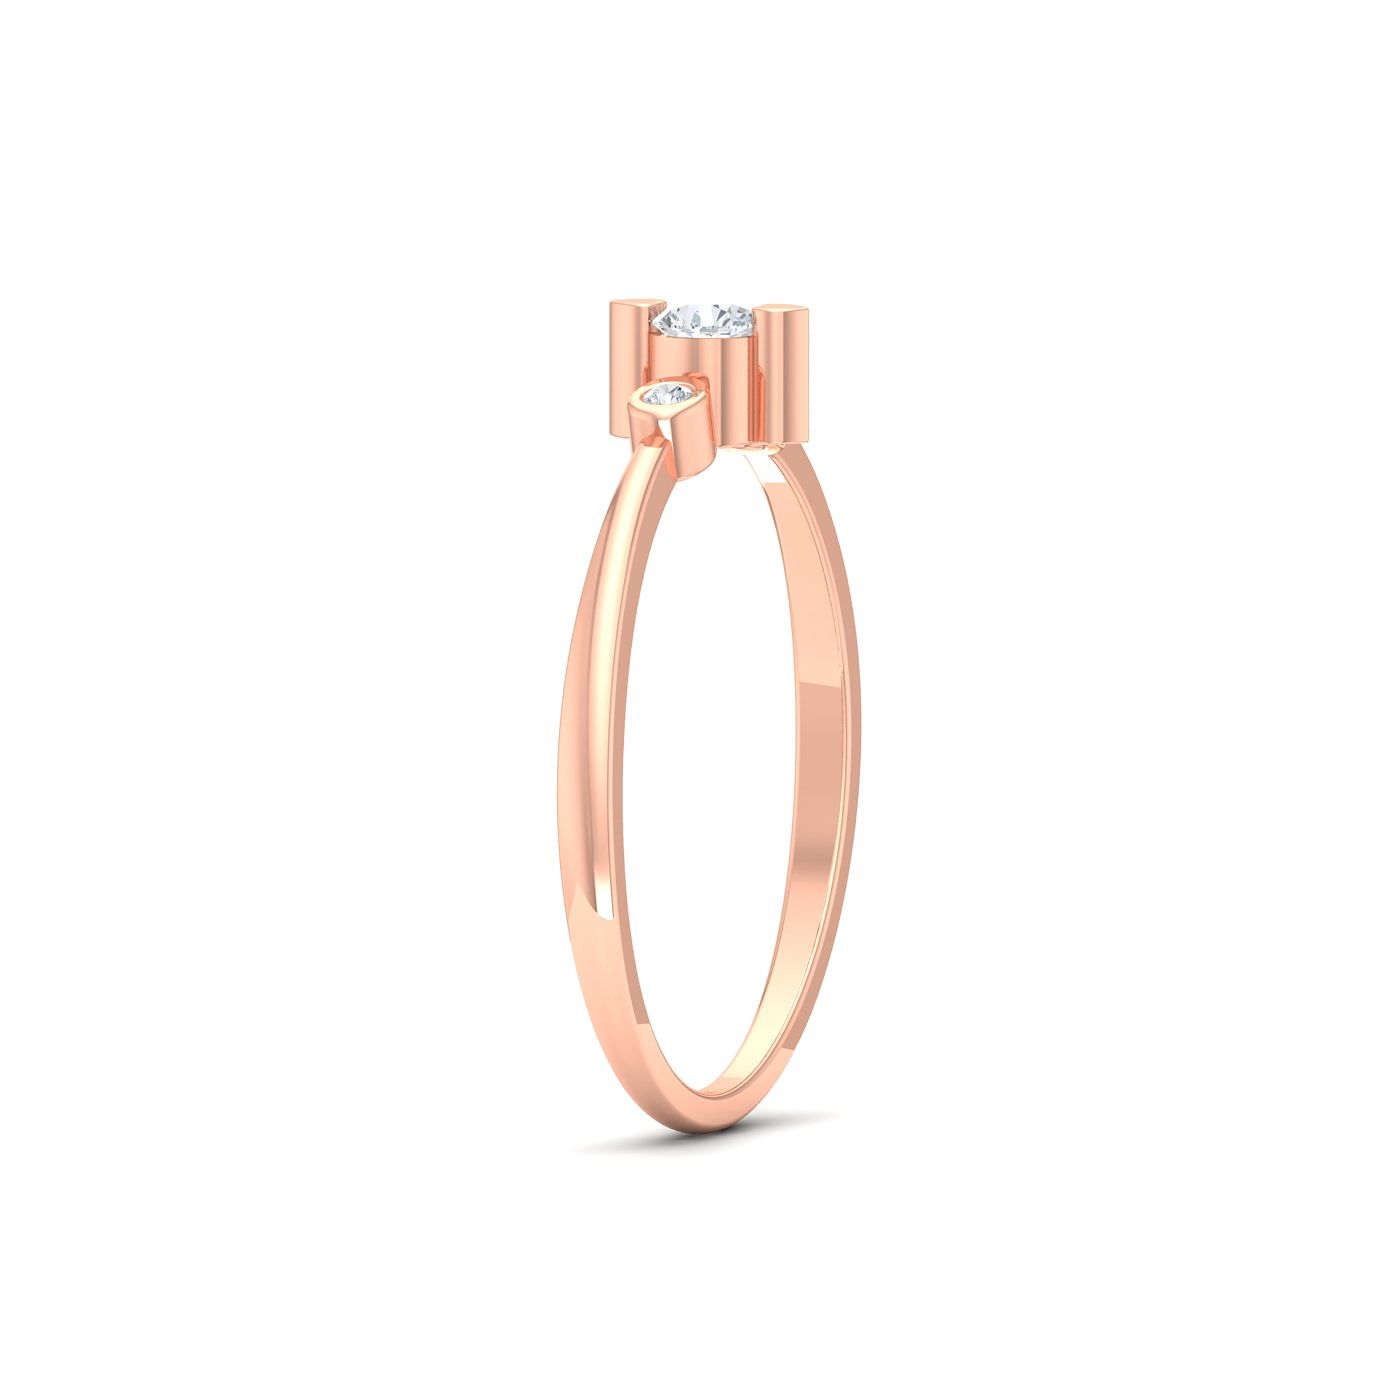 light weight rose gold diamond ring for women